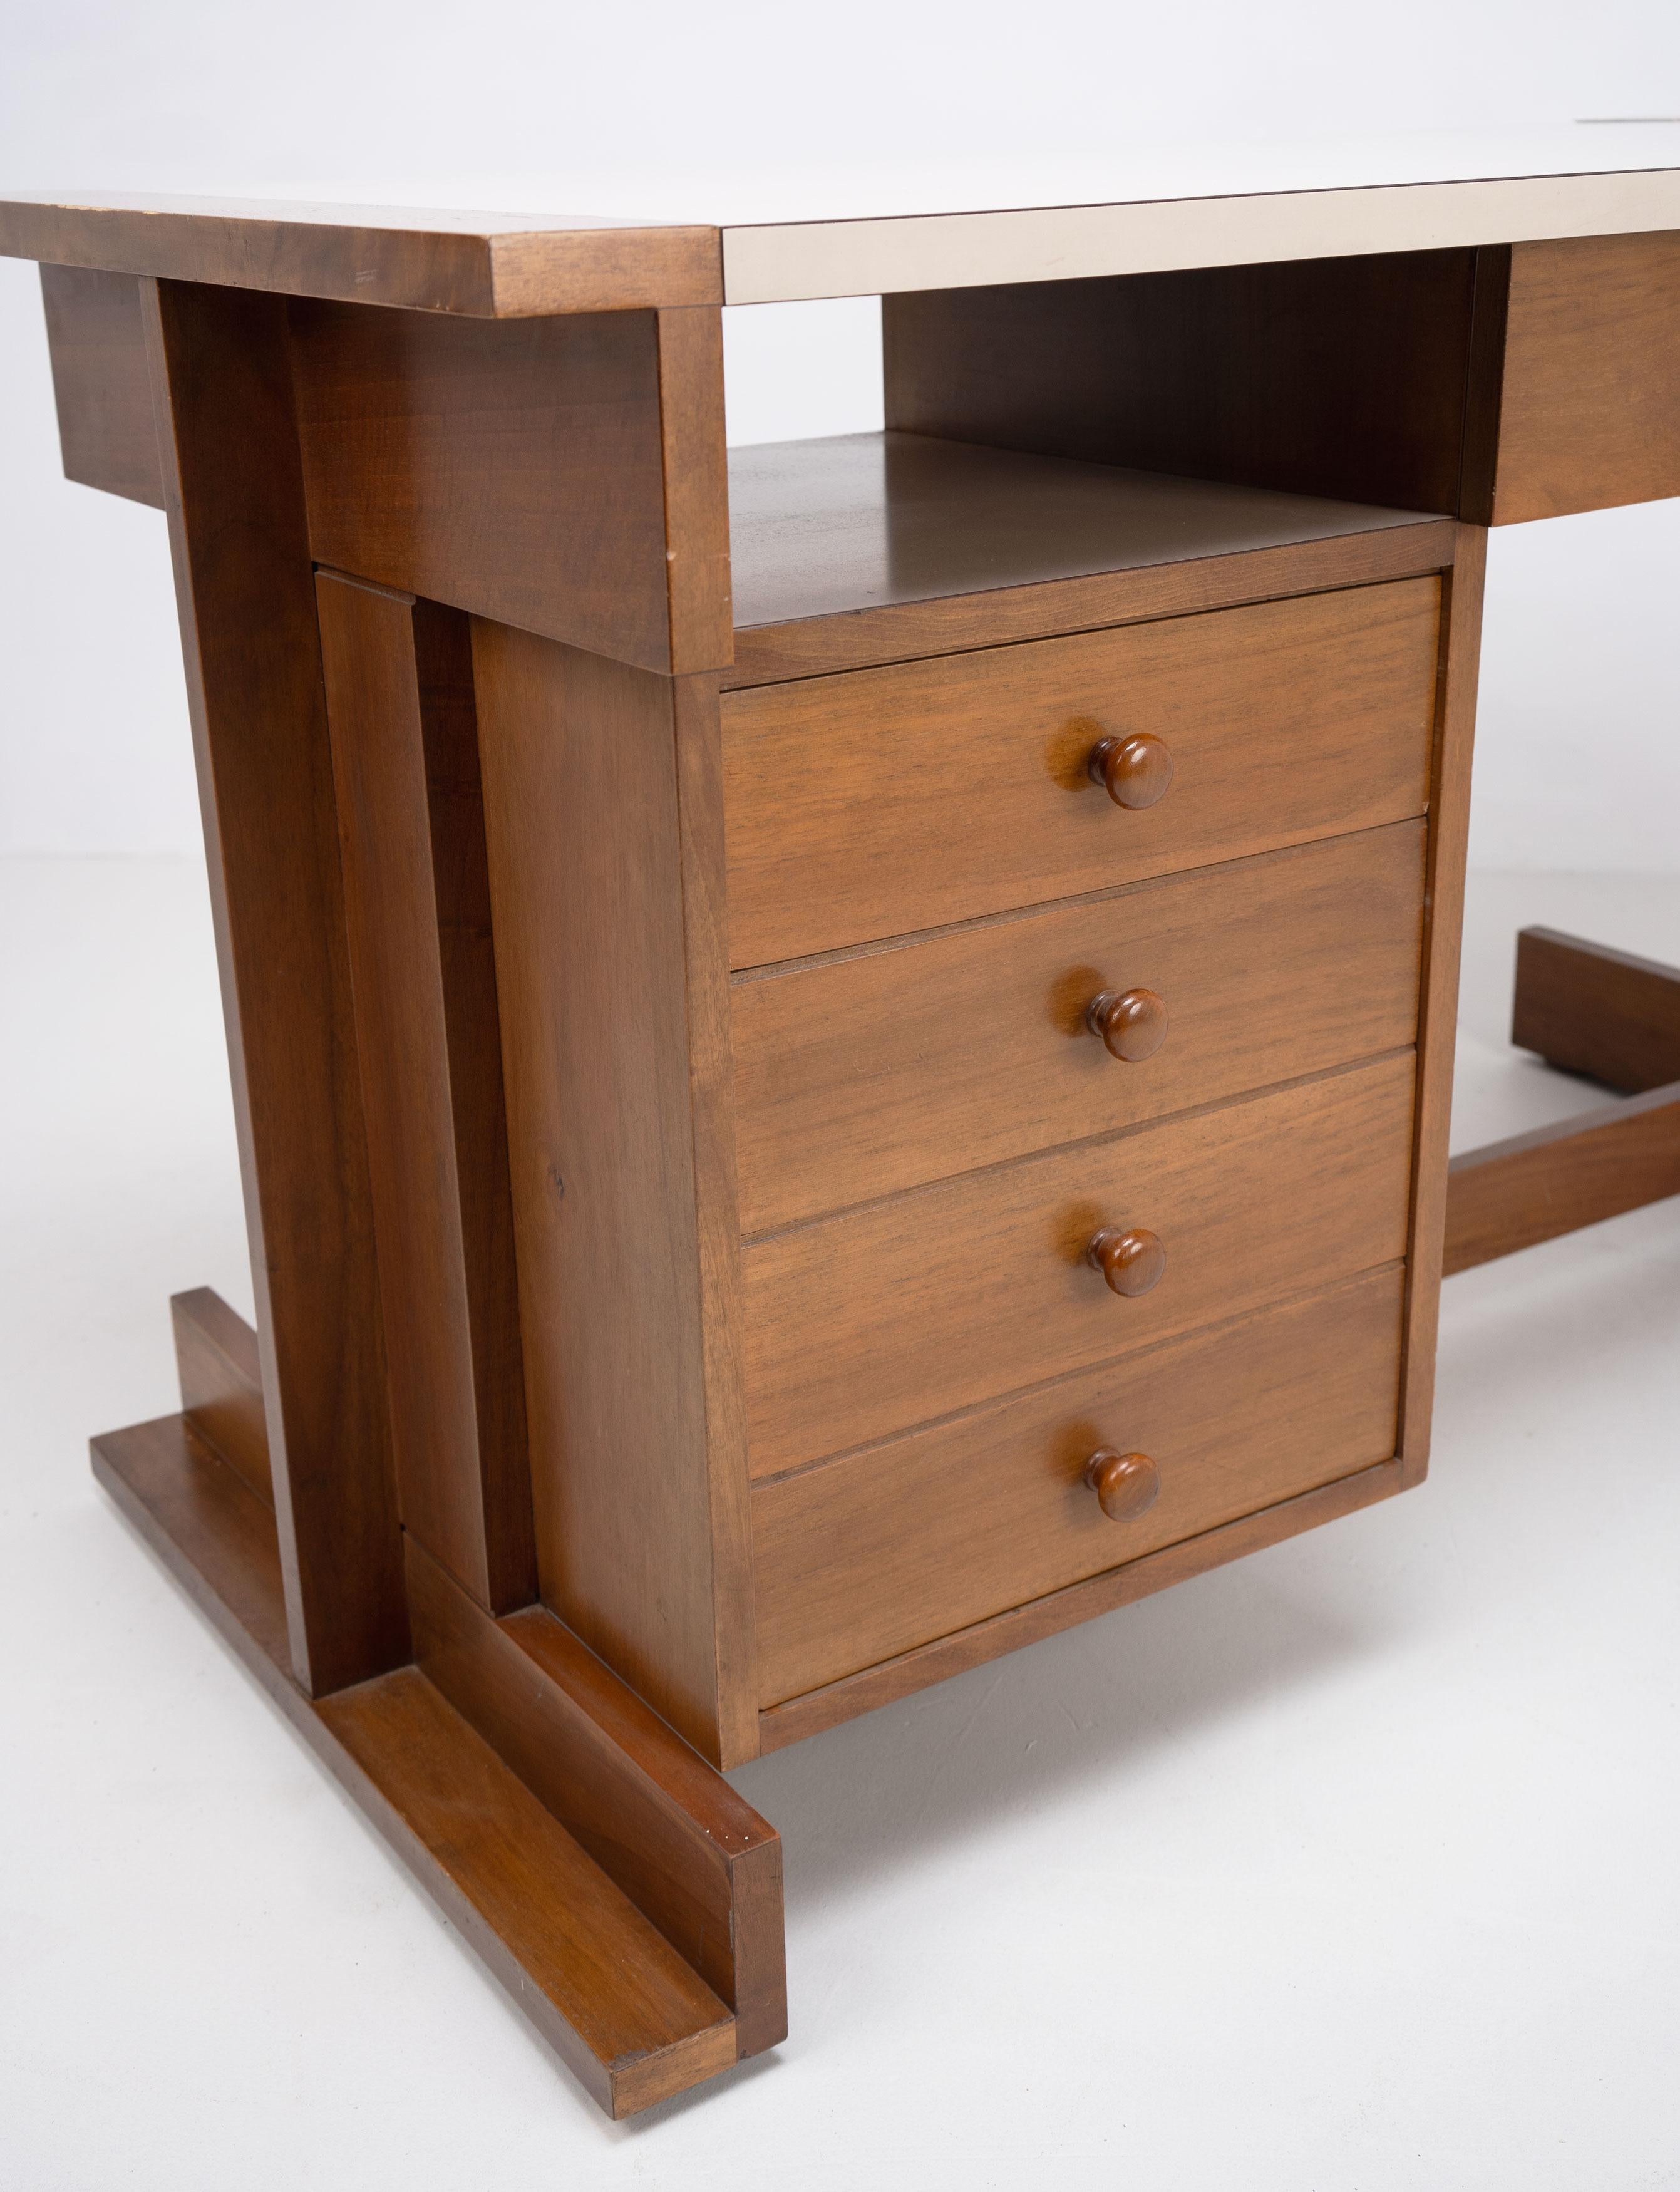 Constructivist Wood and Melamine Desk, Italy, c.1950 In Good Condition For Sale In Surbiton, GB